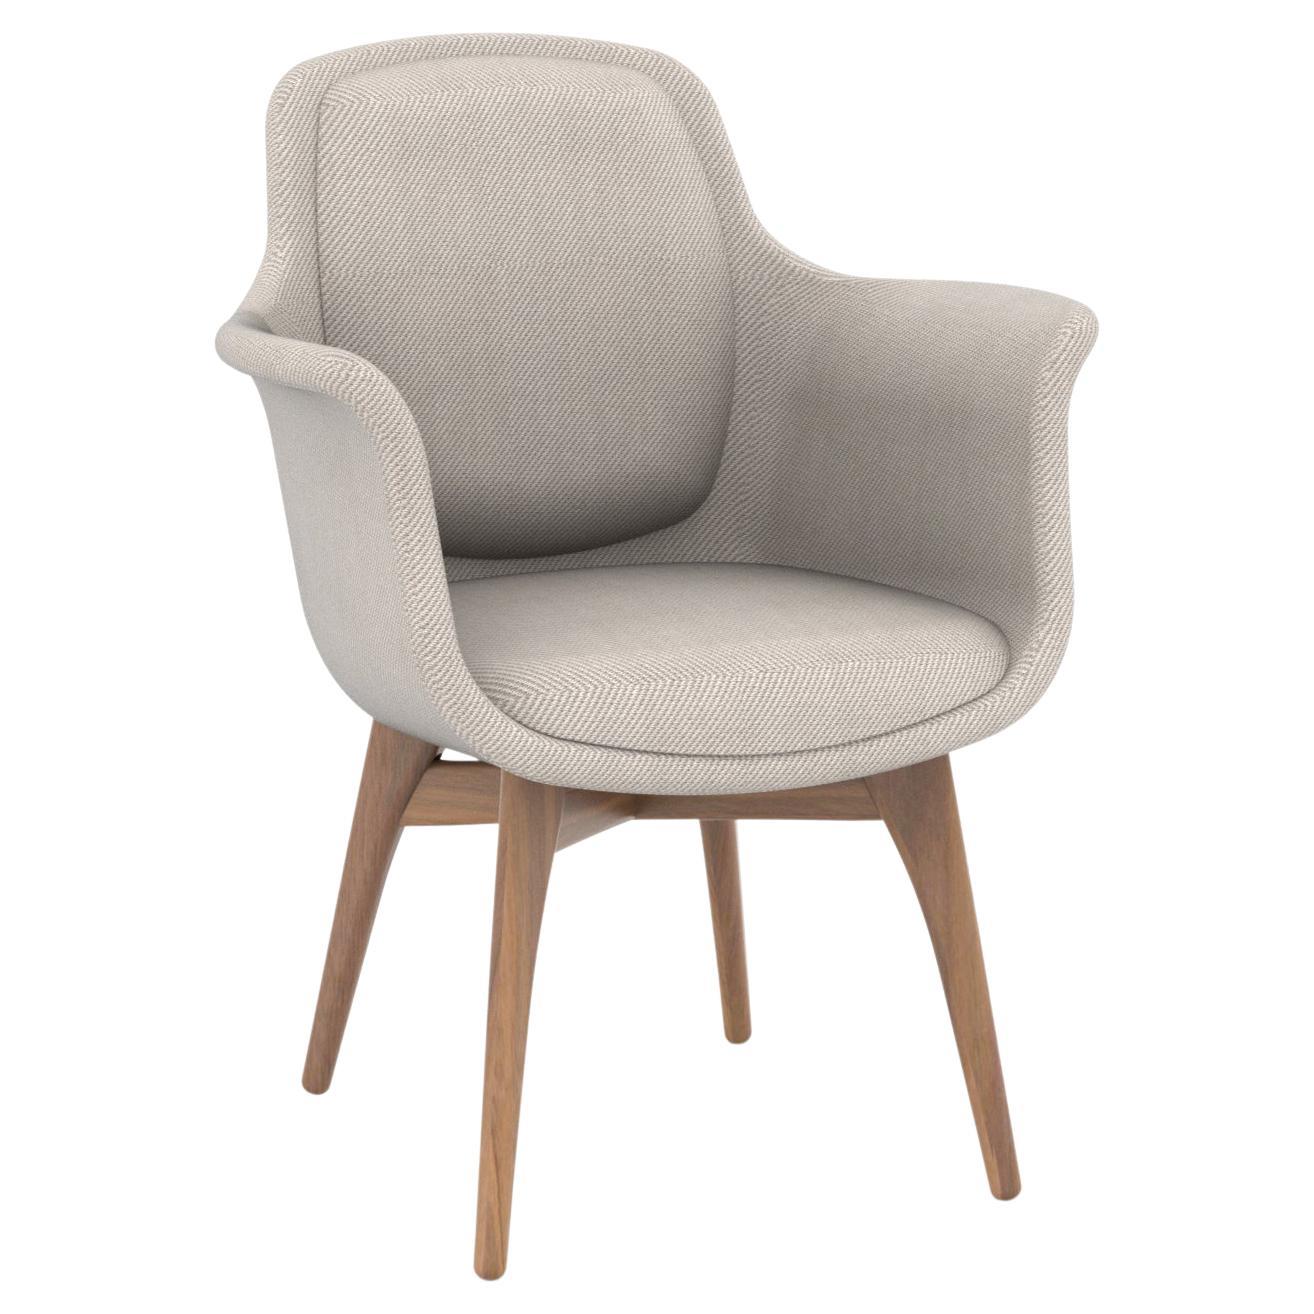 Revised Chidden – solid walnut dining chair